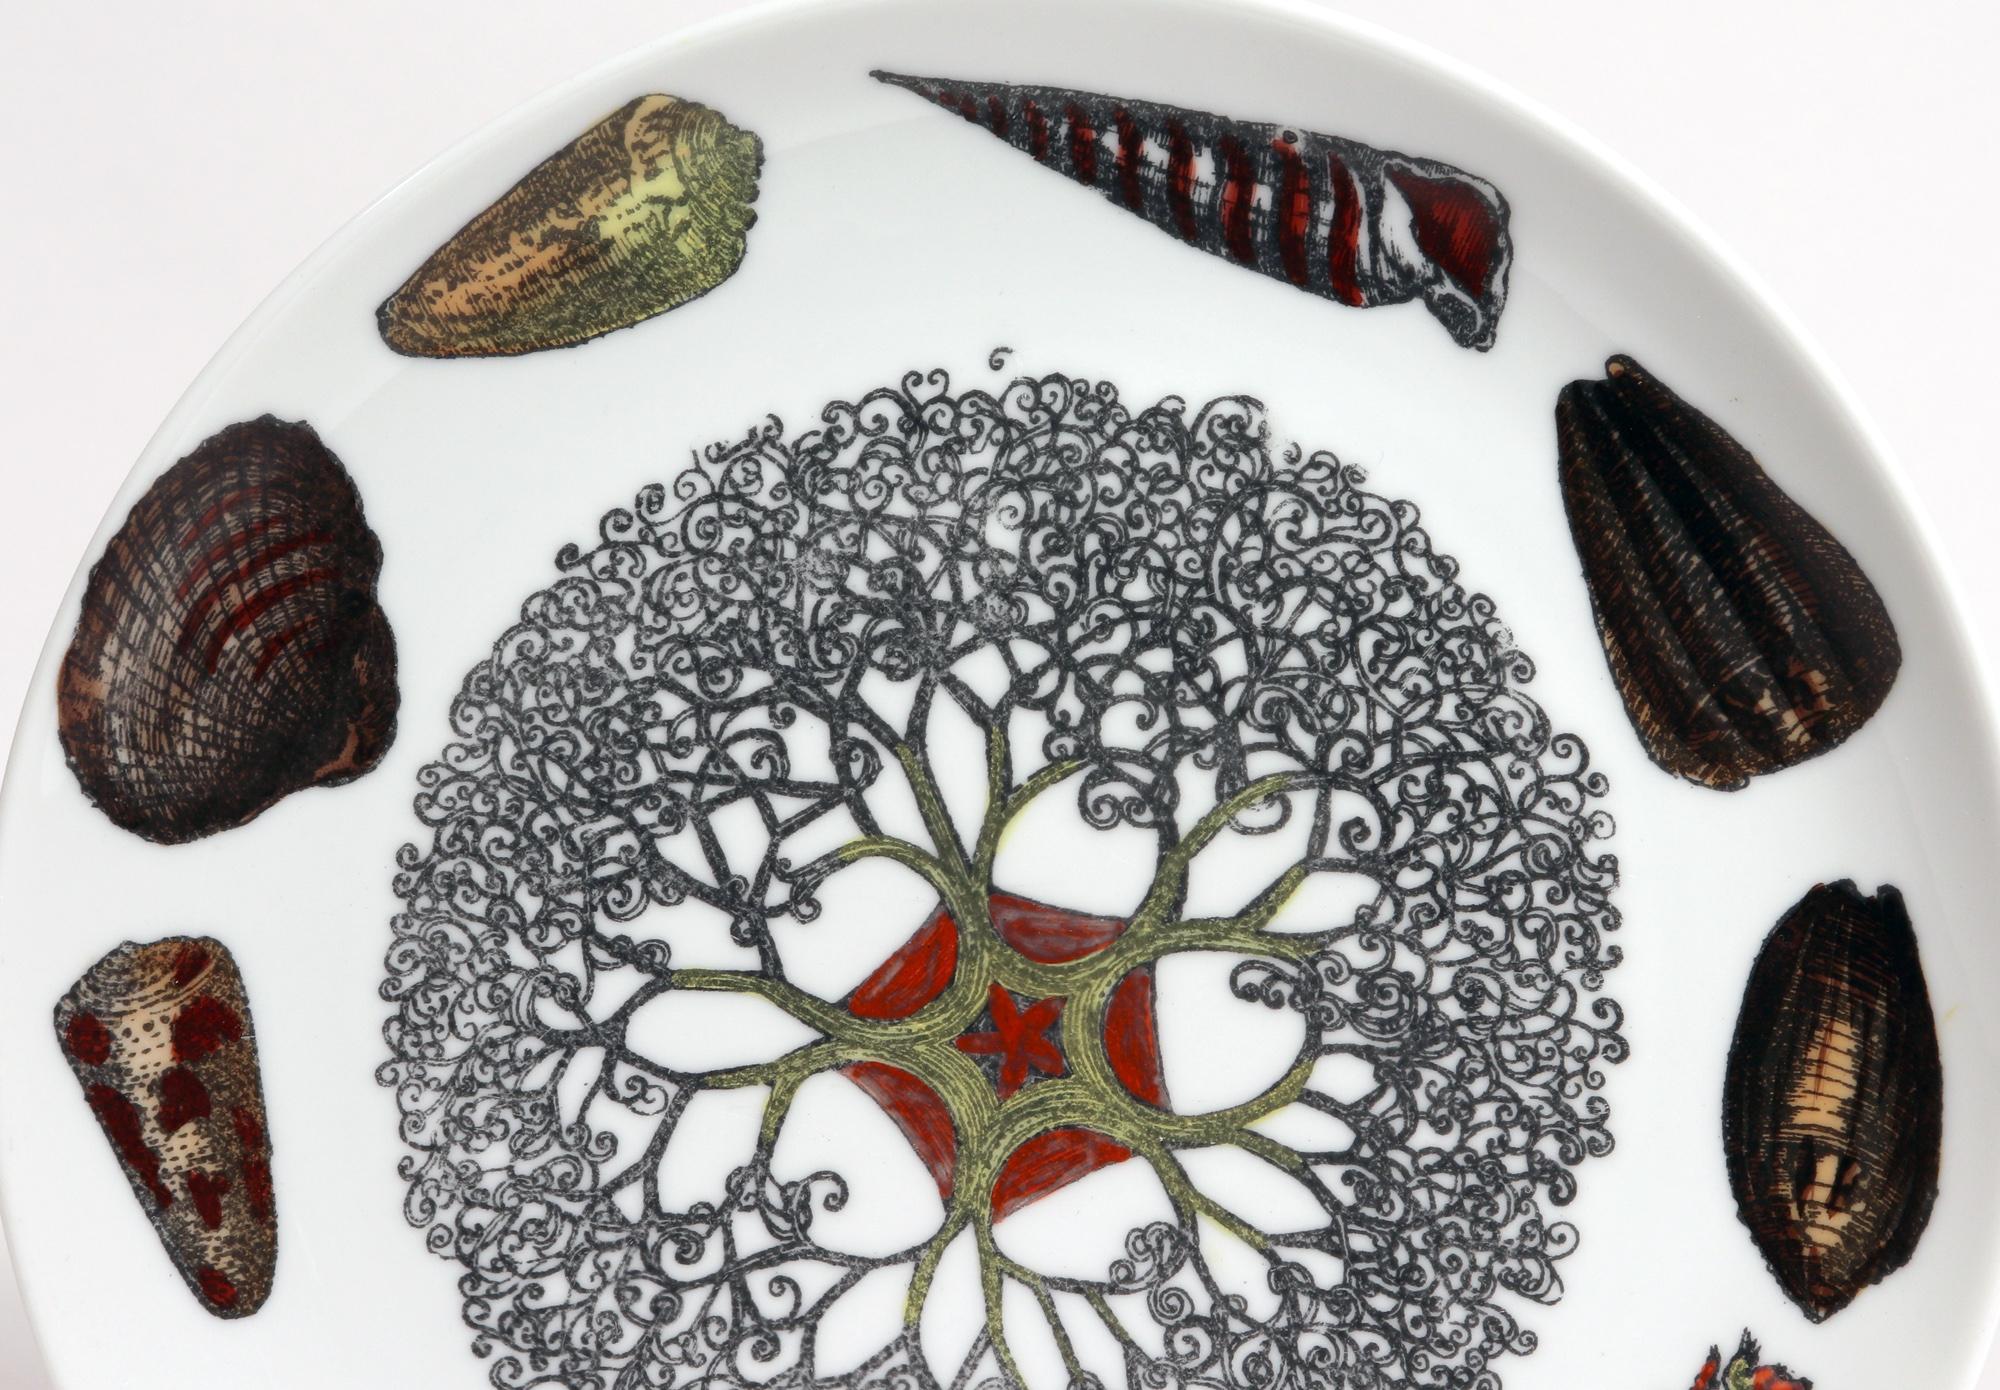 Italian Piero Fornasetti Porcelain Conchiglie Seashell Plate with Mollusks, #9 For Sale